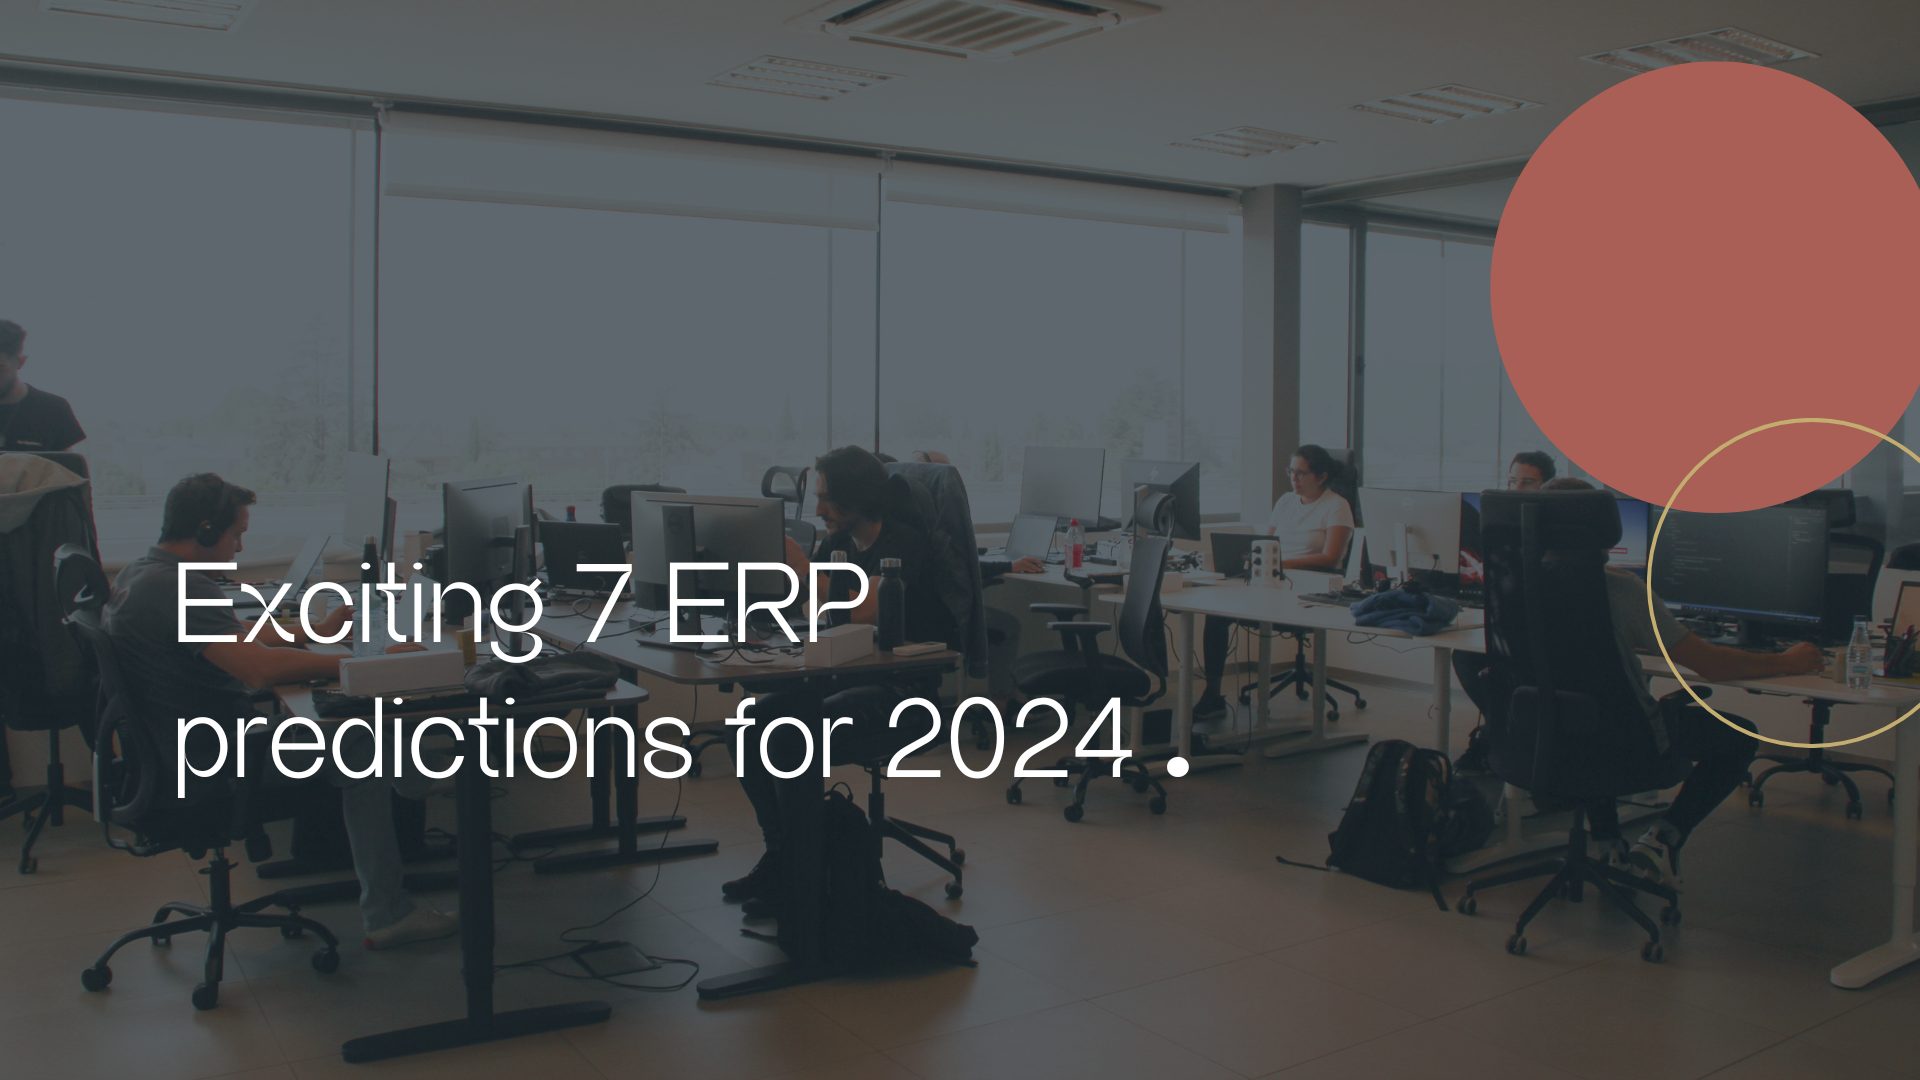 7 erp predictions 2024